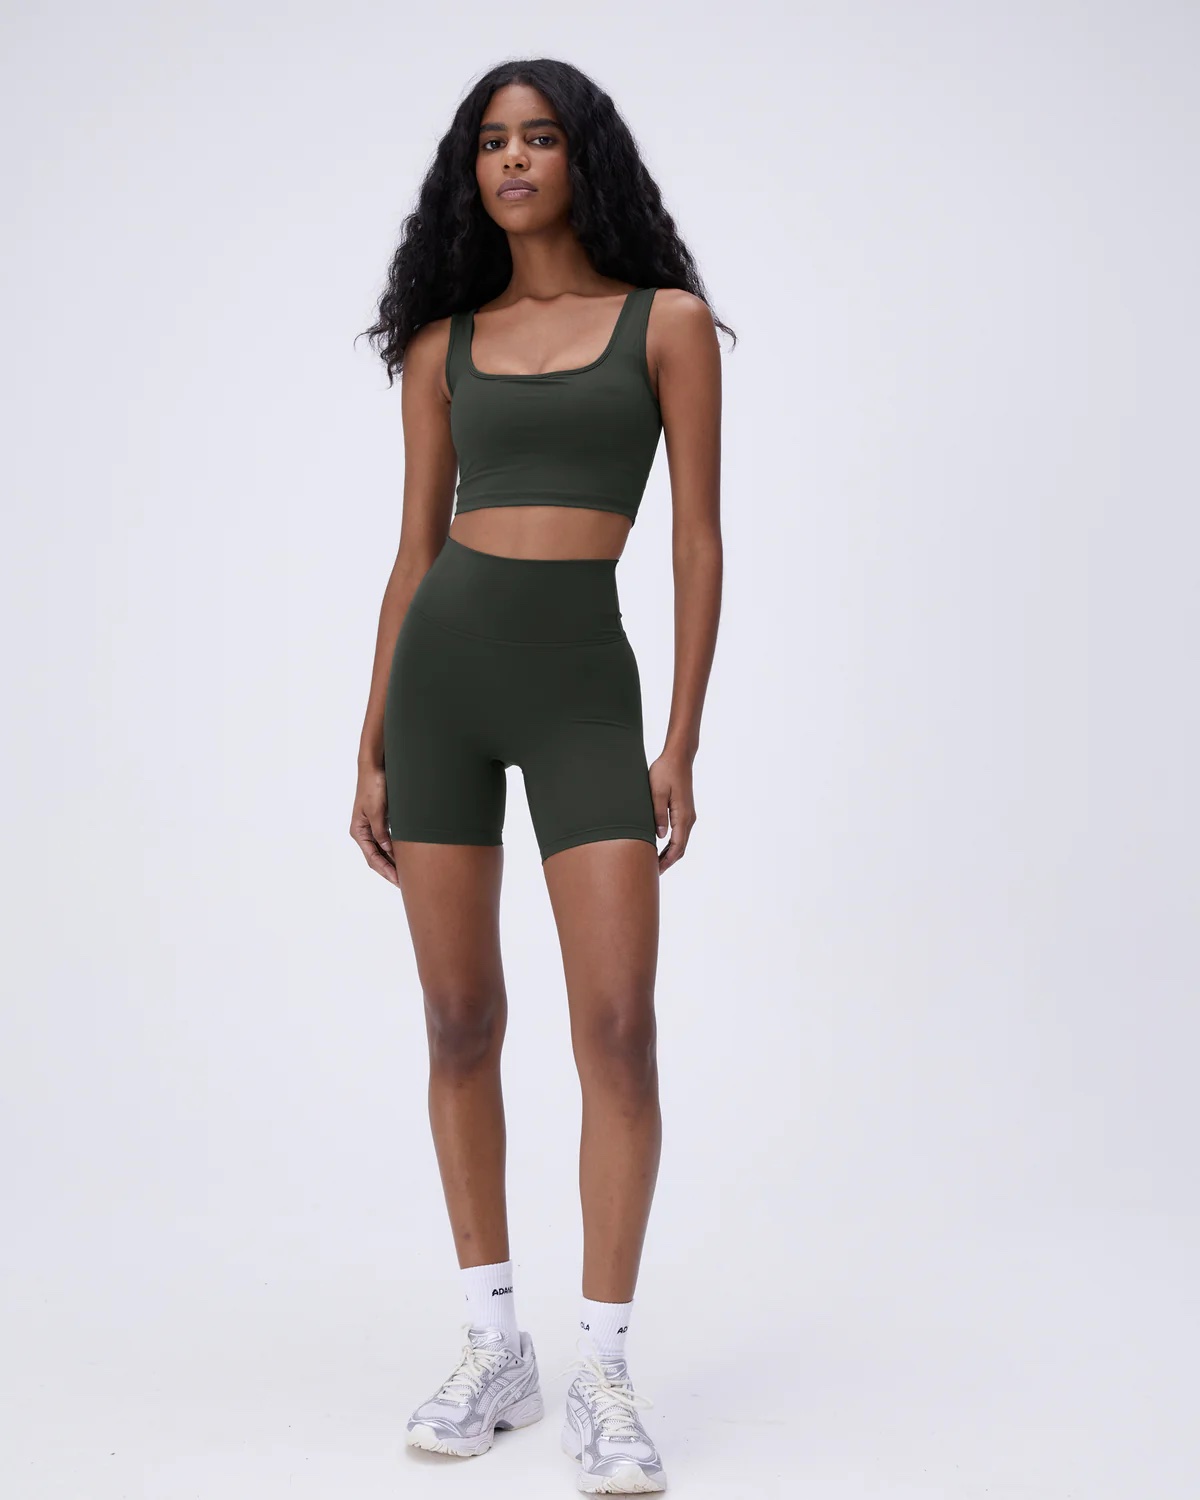 Woman Modeling Adanola Sports Bra | Summer Workout Clothes